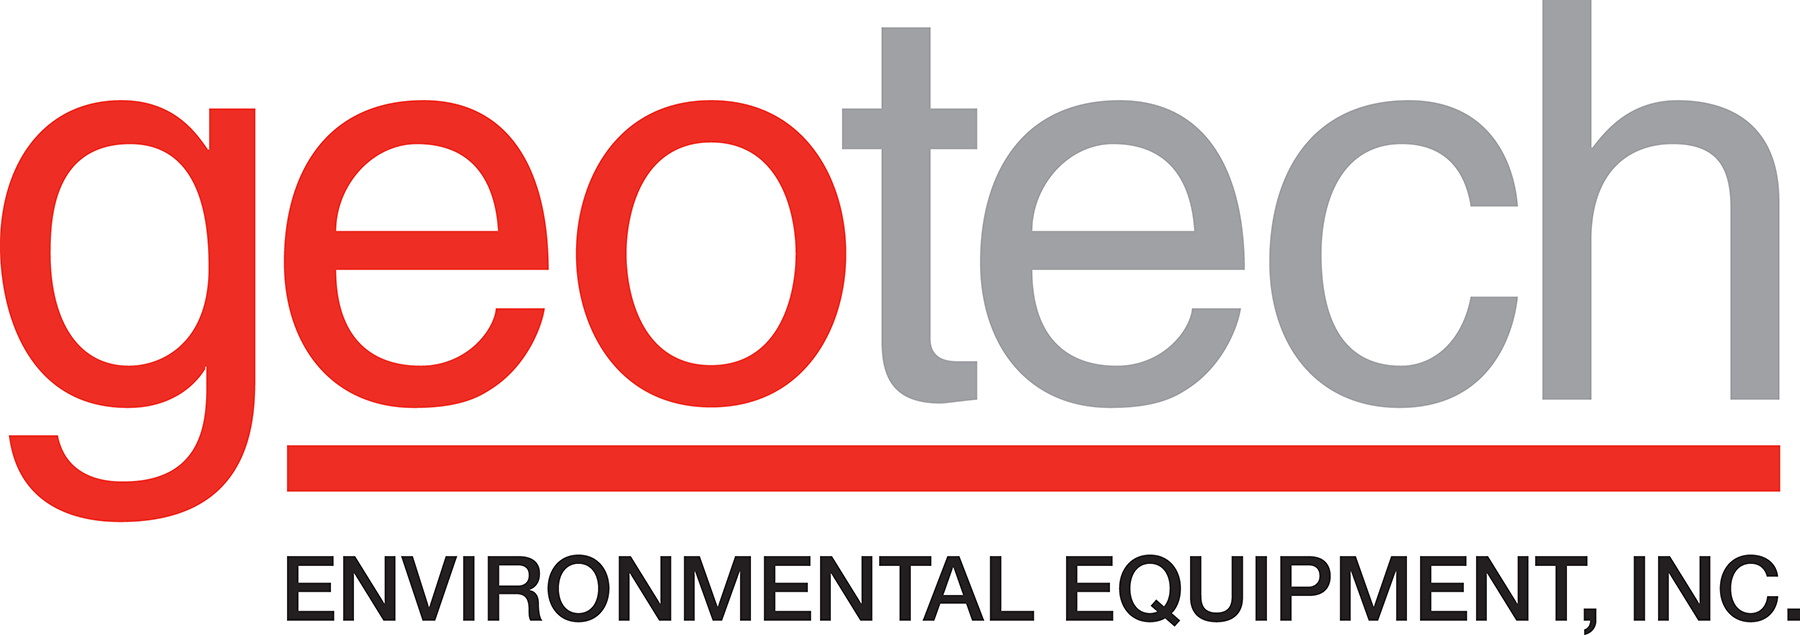 logo for exhibitor Geotech Environmental Equipment